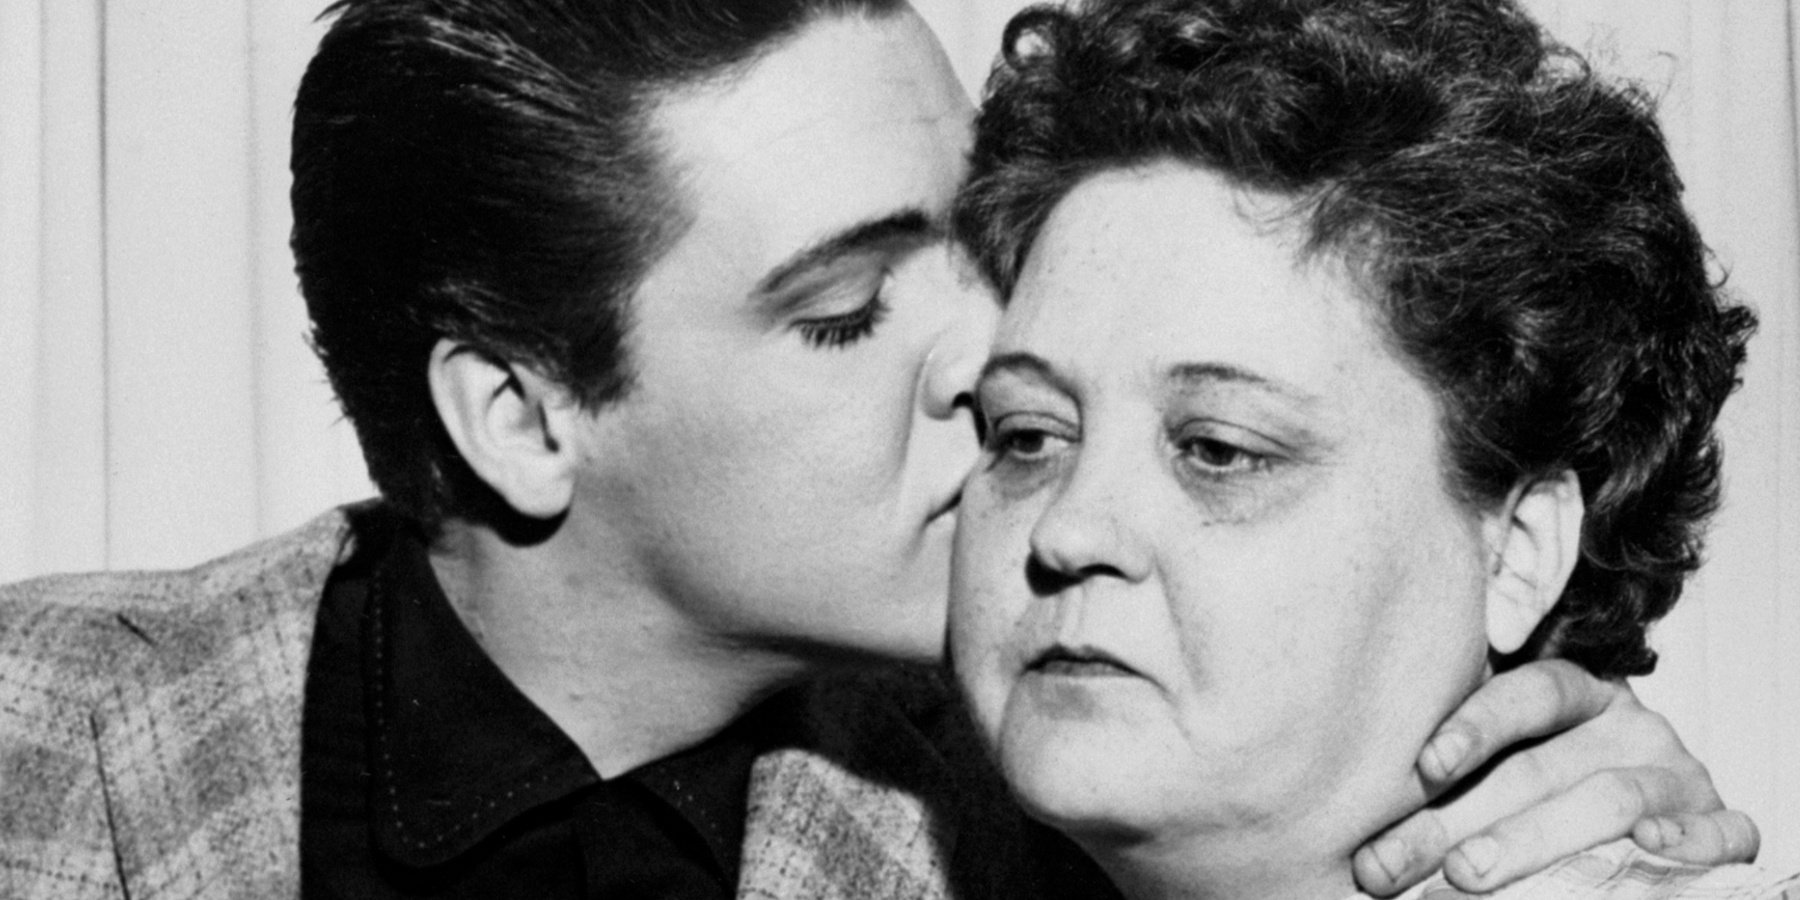 Elvis Presley and his mother, Gladys Presley